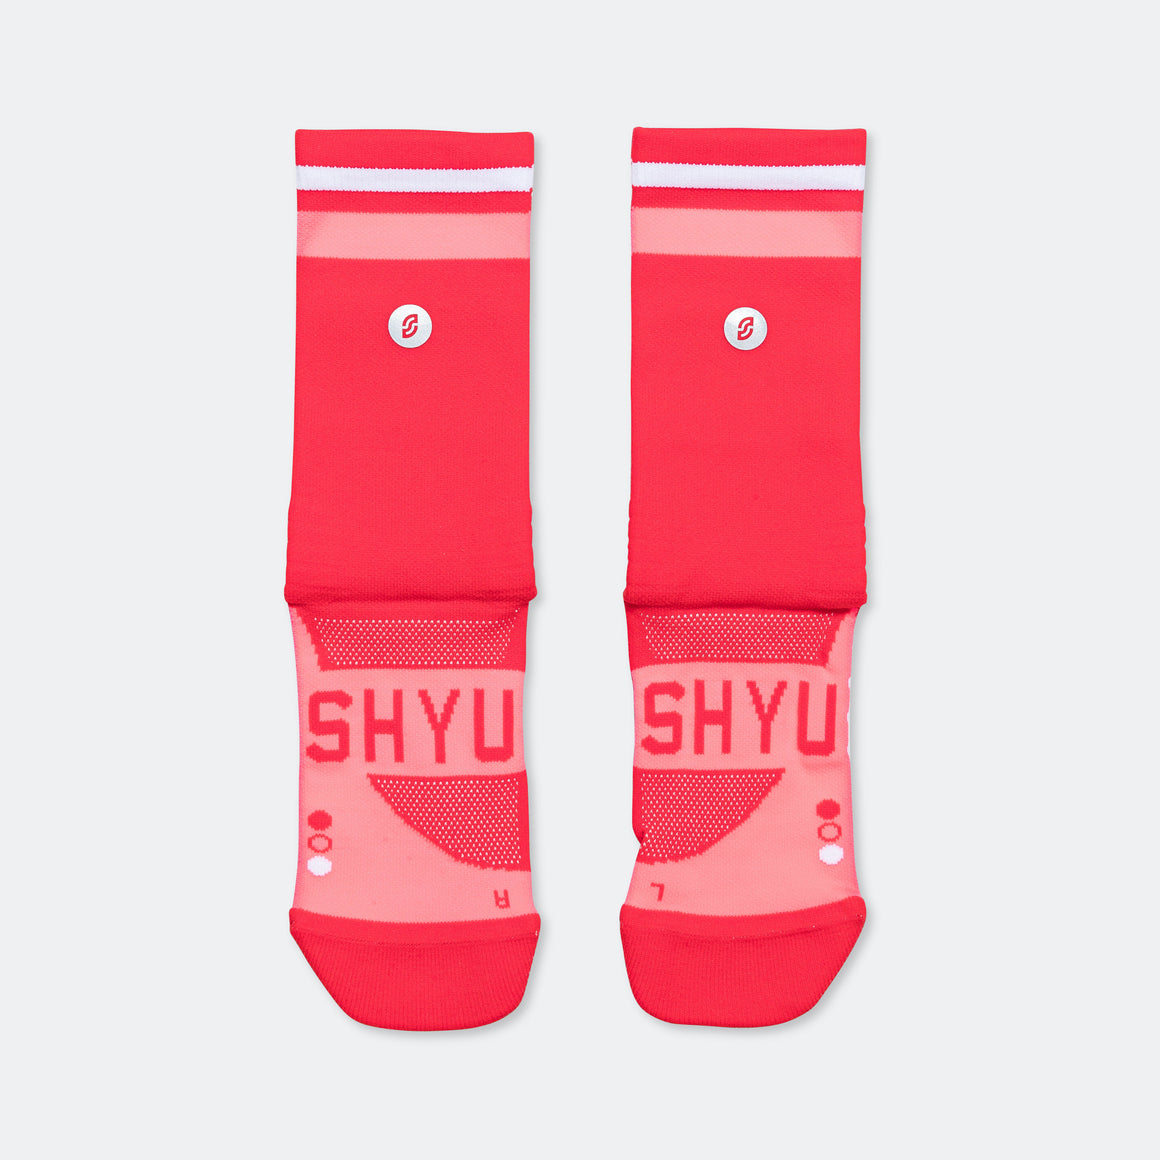 Shyu - Half Crew Racing Socks - Red/Pink/White - Up There Athletics